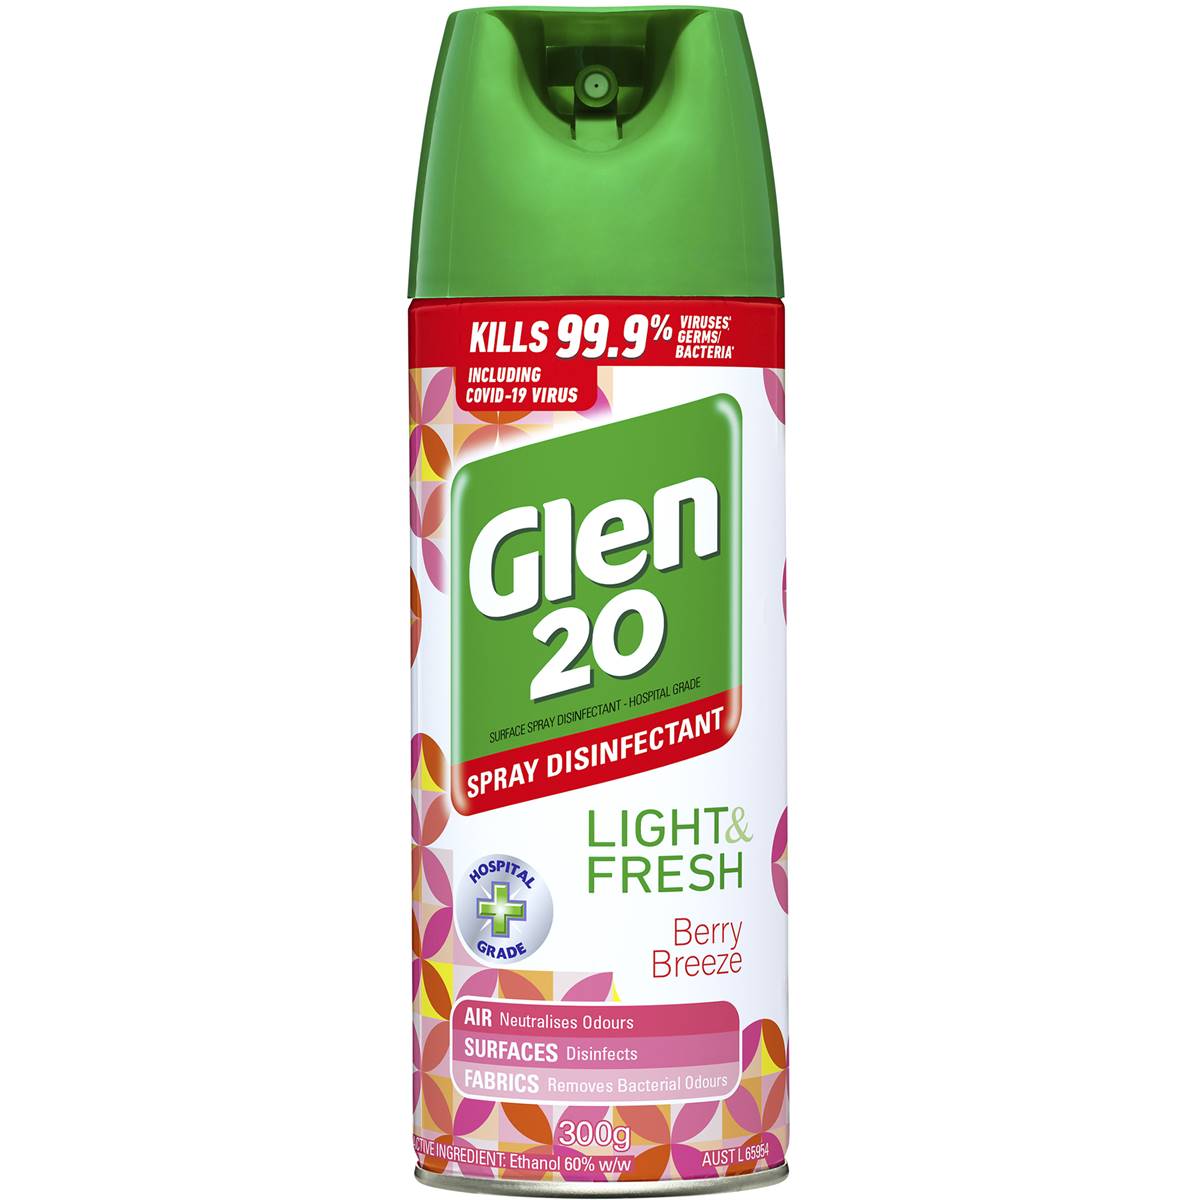 Glen 20 Disinfectant Spray Berry Breeze 300g